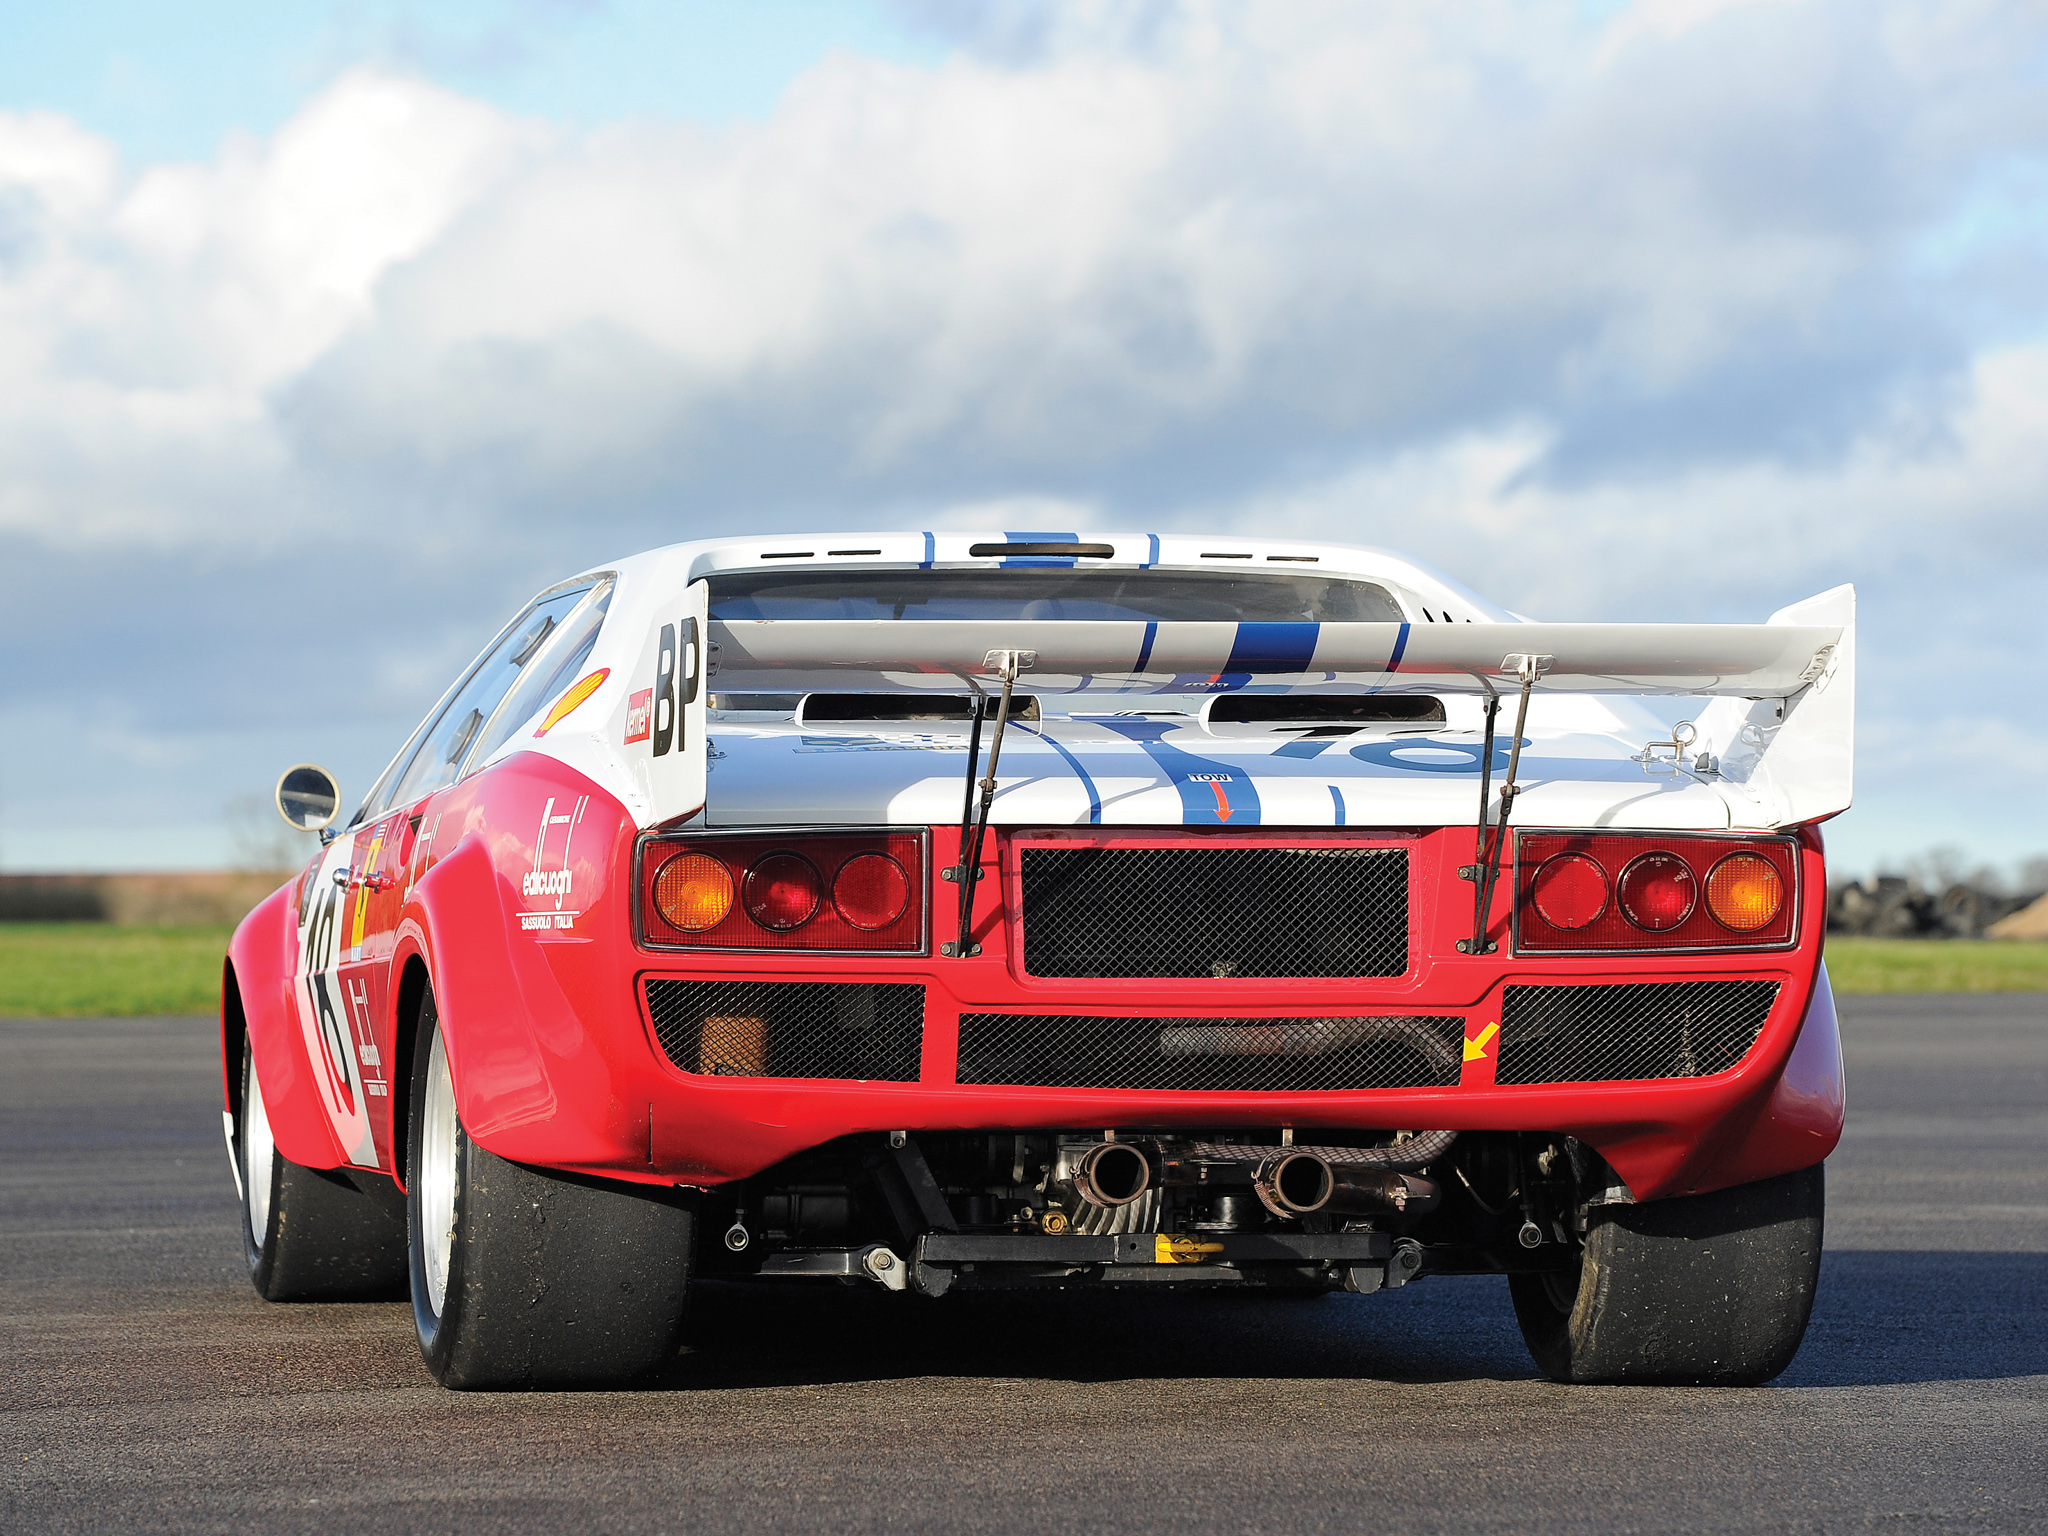 1974, Ferrari, Dino, 308, Gt 4, Nart, 08020, Le mans, Race, Racing Wallpaper